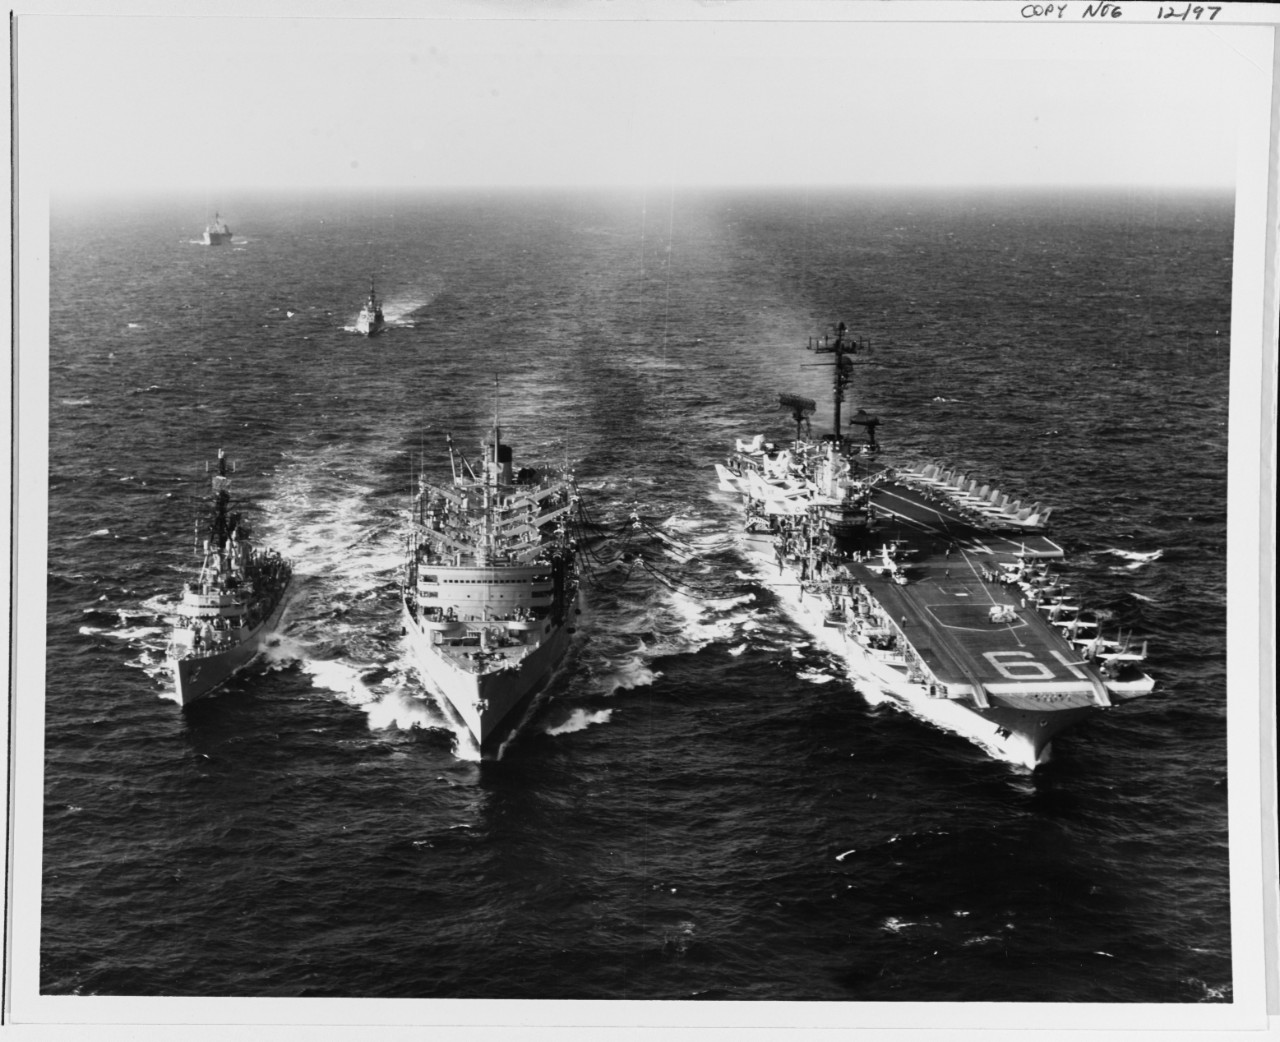 Refueling from the USS SACRAMENTO (AOE-1)